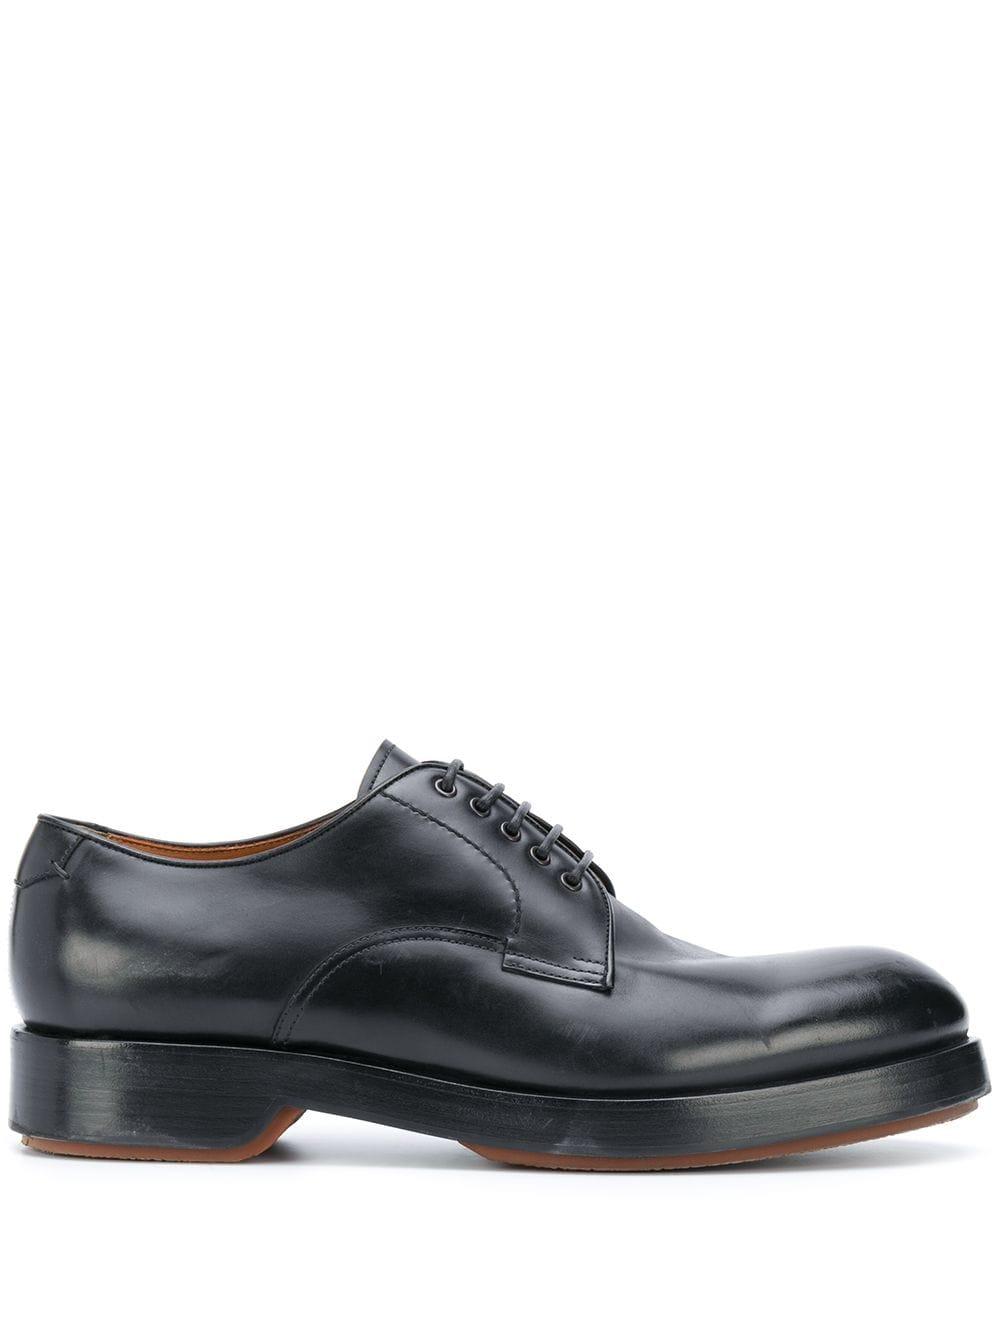 Ermenegildo Zegna Rubber Lace-up Derby Shoes in Black for Men - Lyst